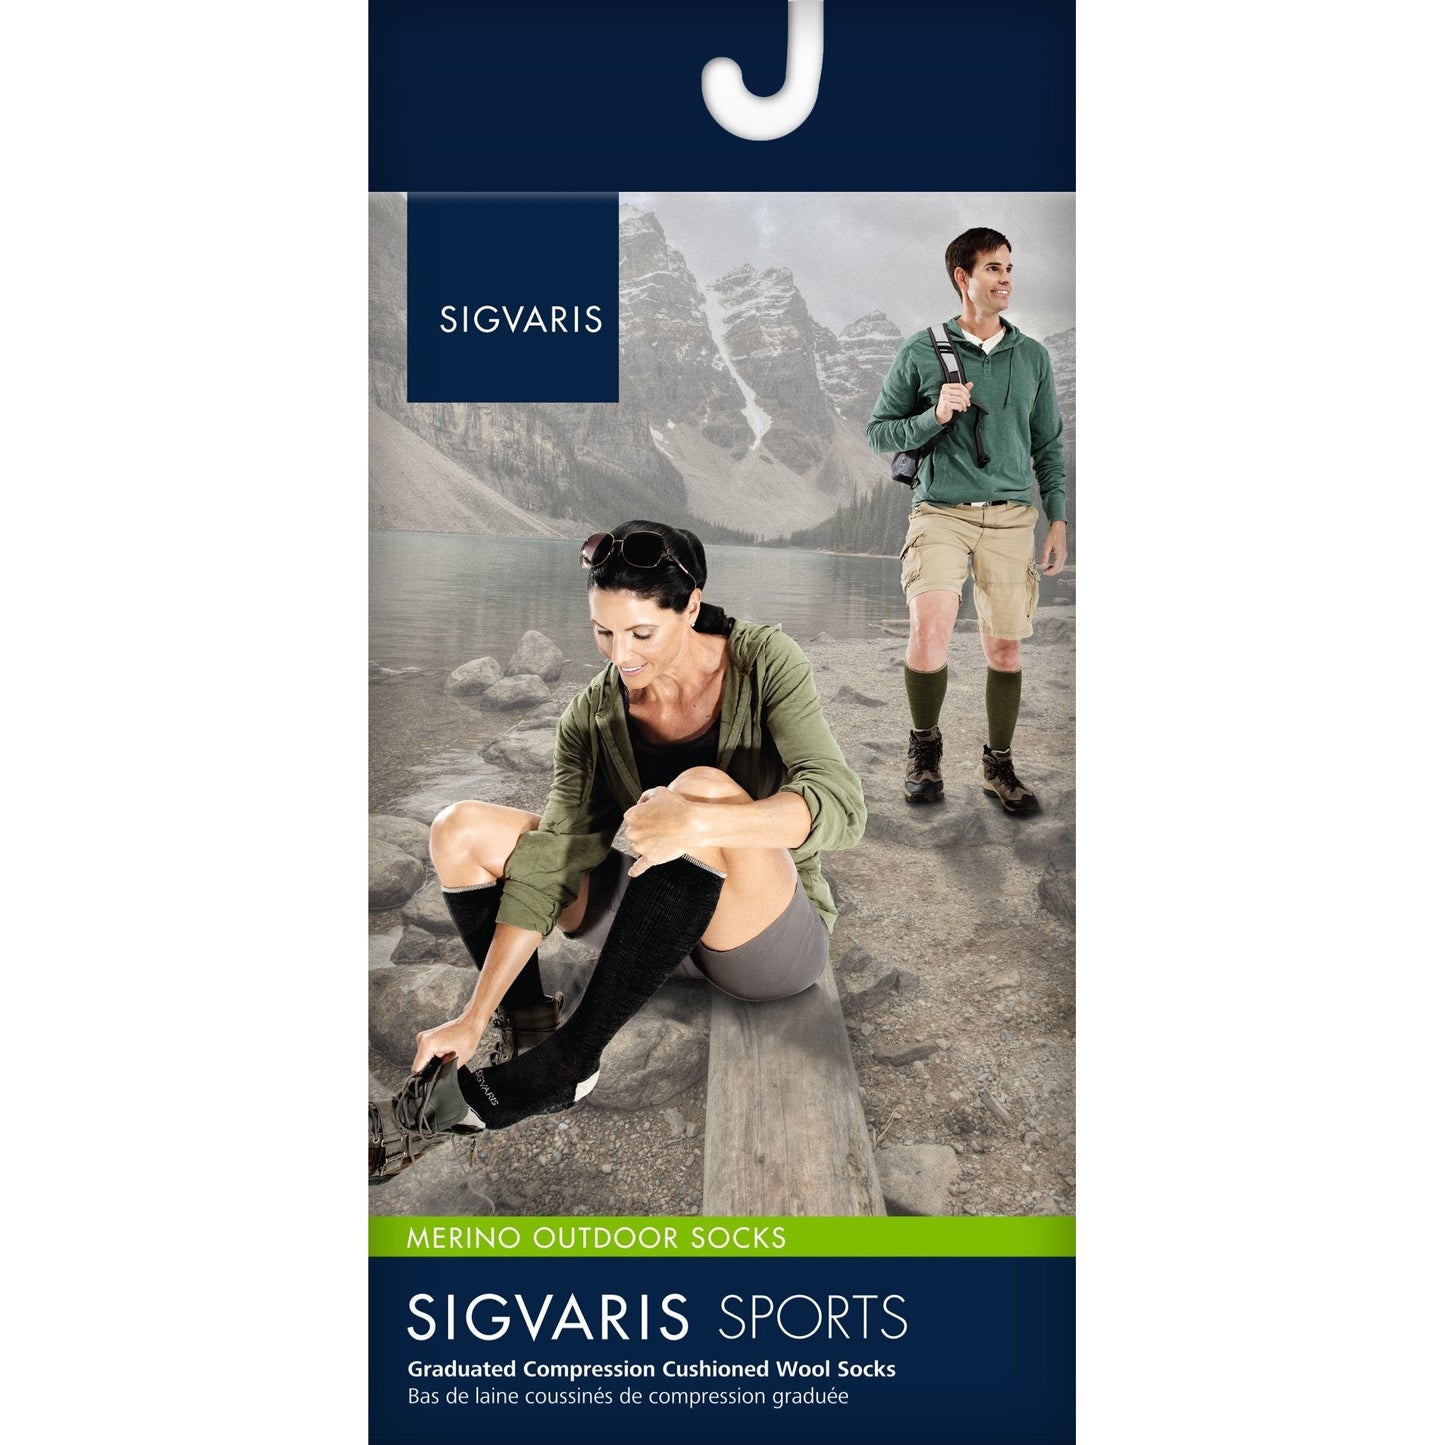 Sigvaris Merino Outdoor Socks 15-20 mmHg Knee High